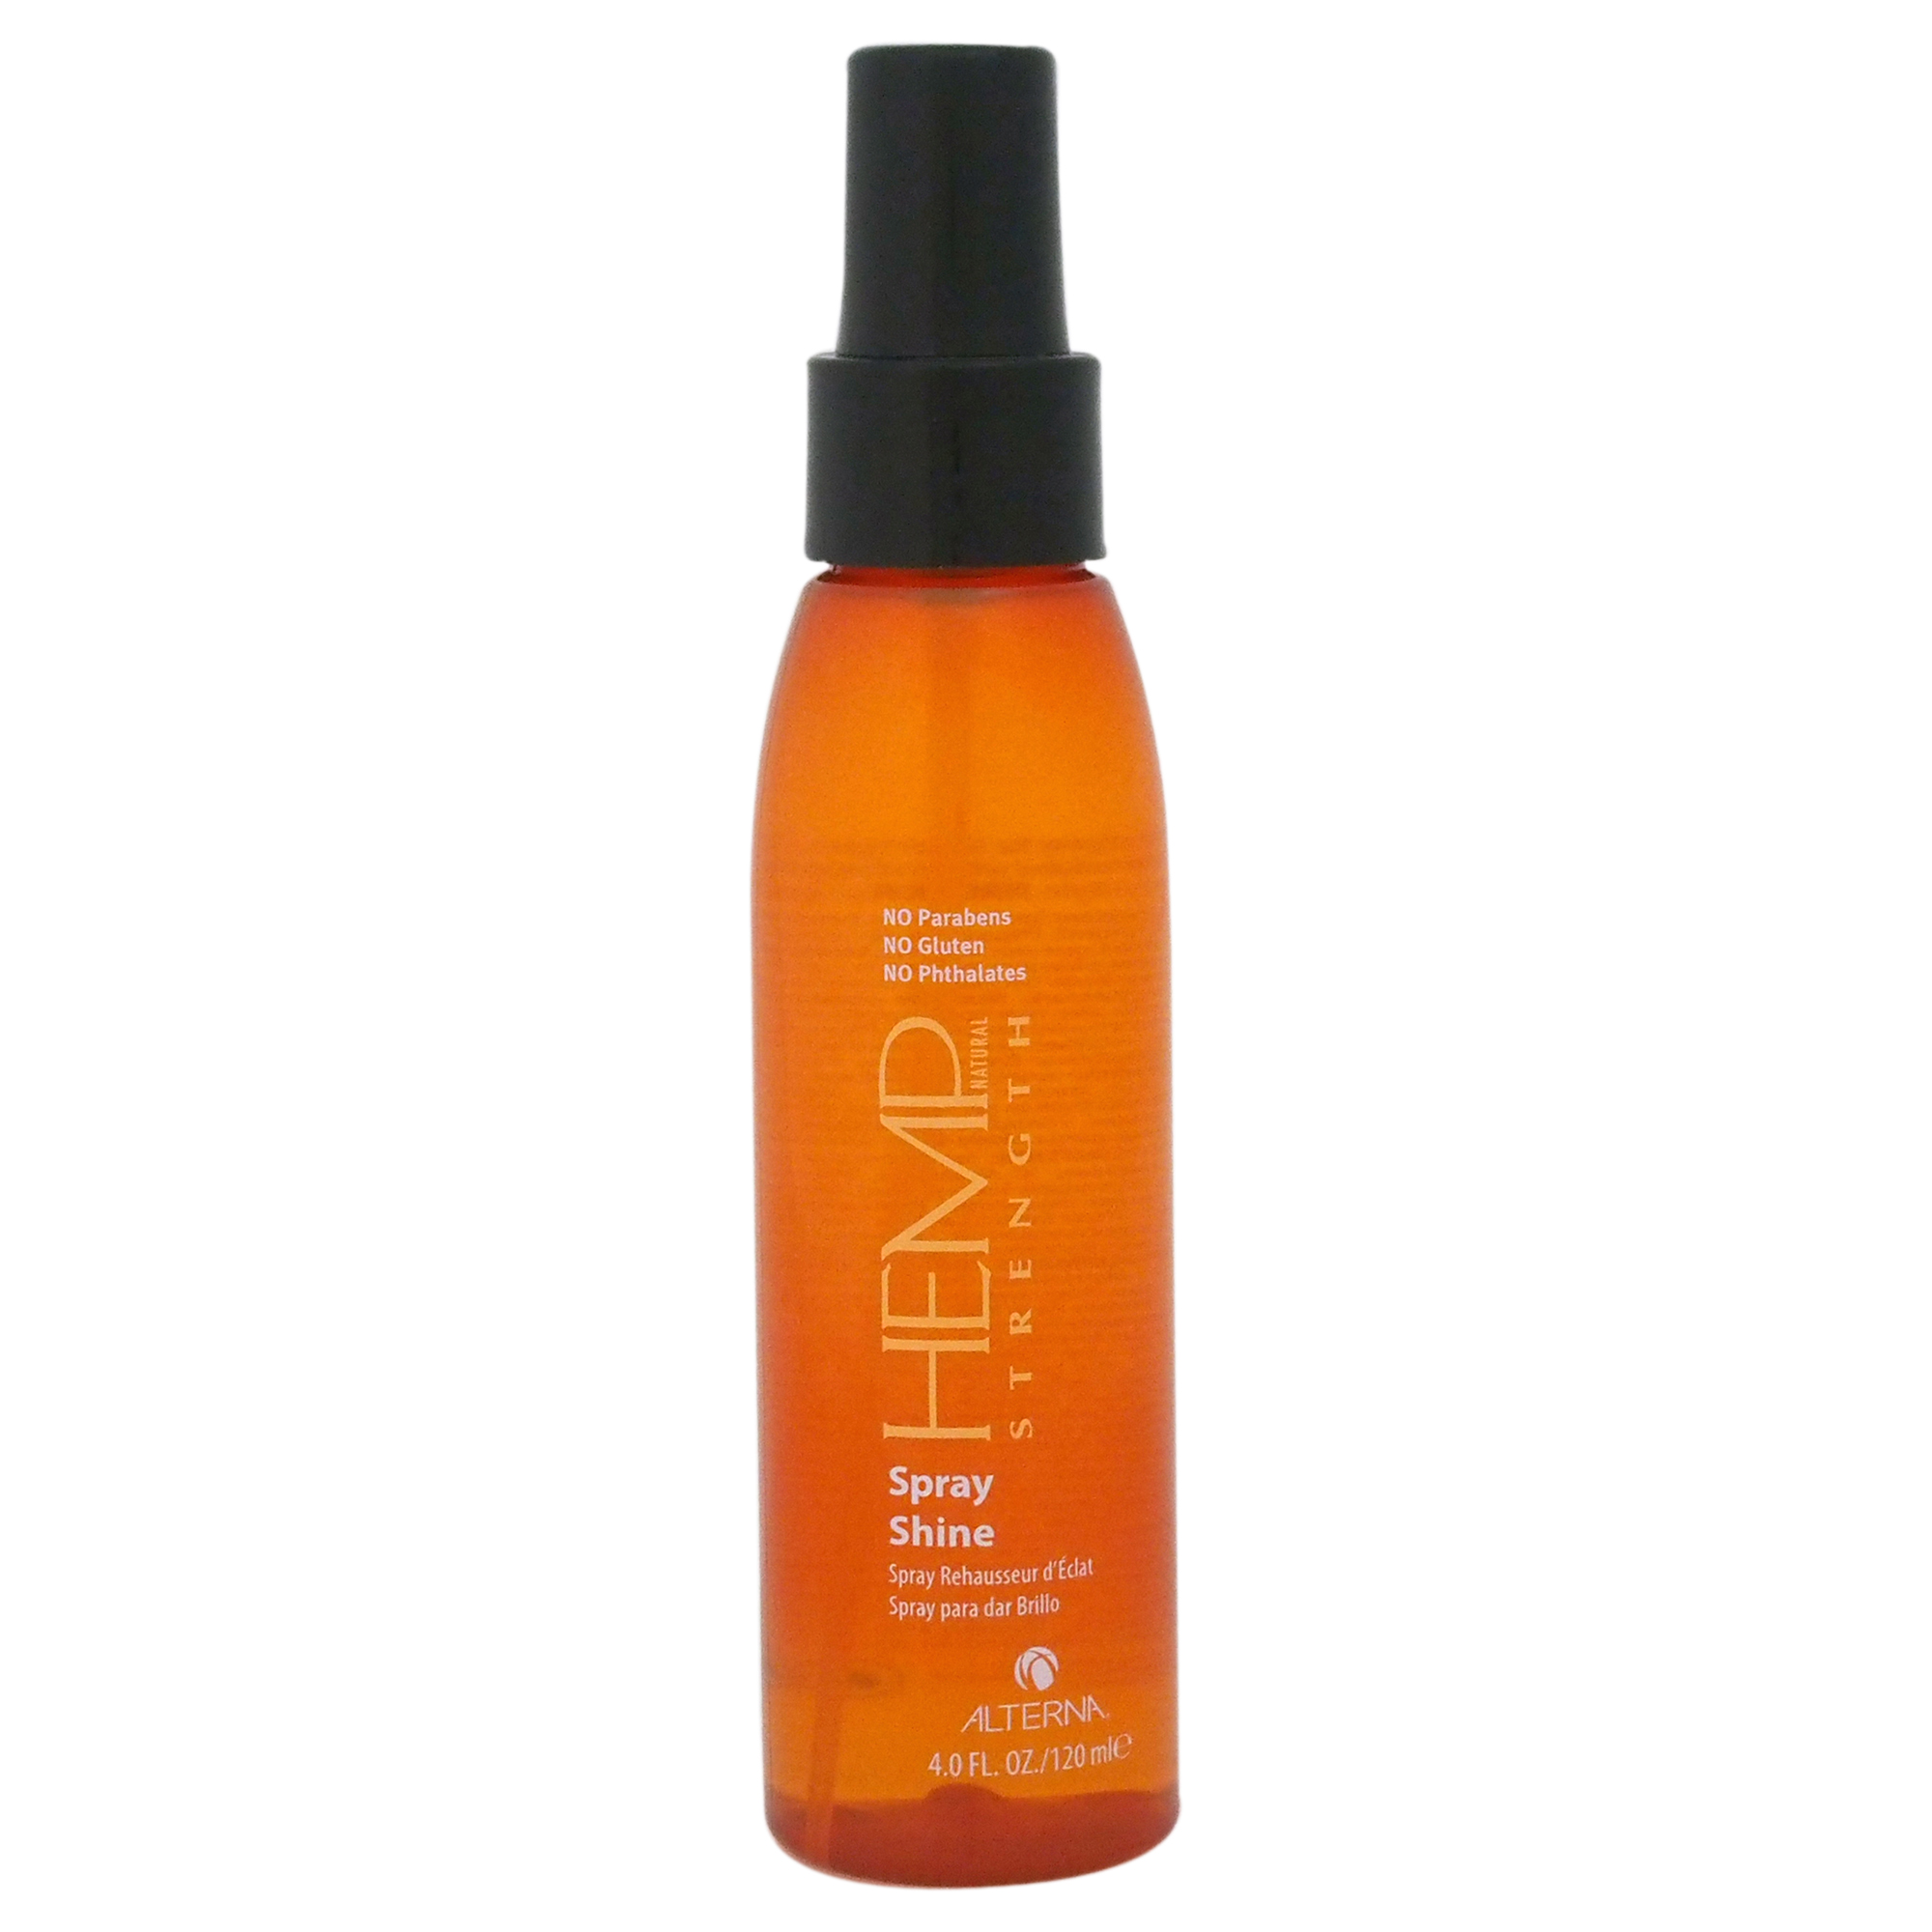 Hemp with Organics Spray Shine Alterna 4 oz Hair Spray - image 1 of 1